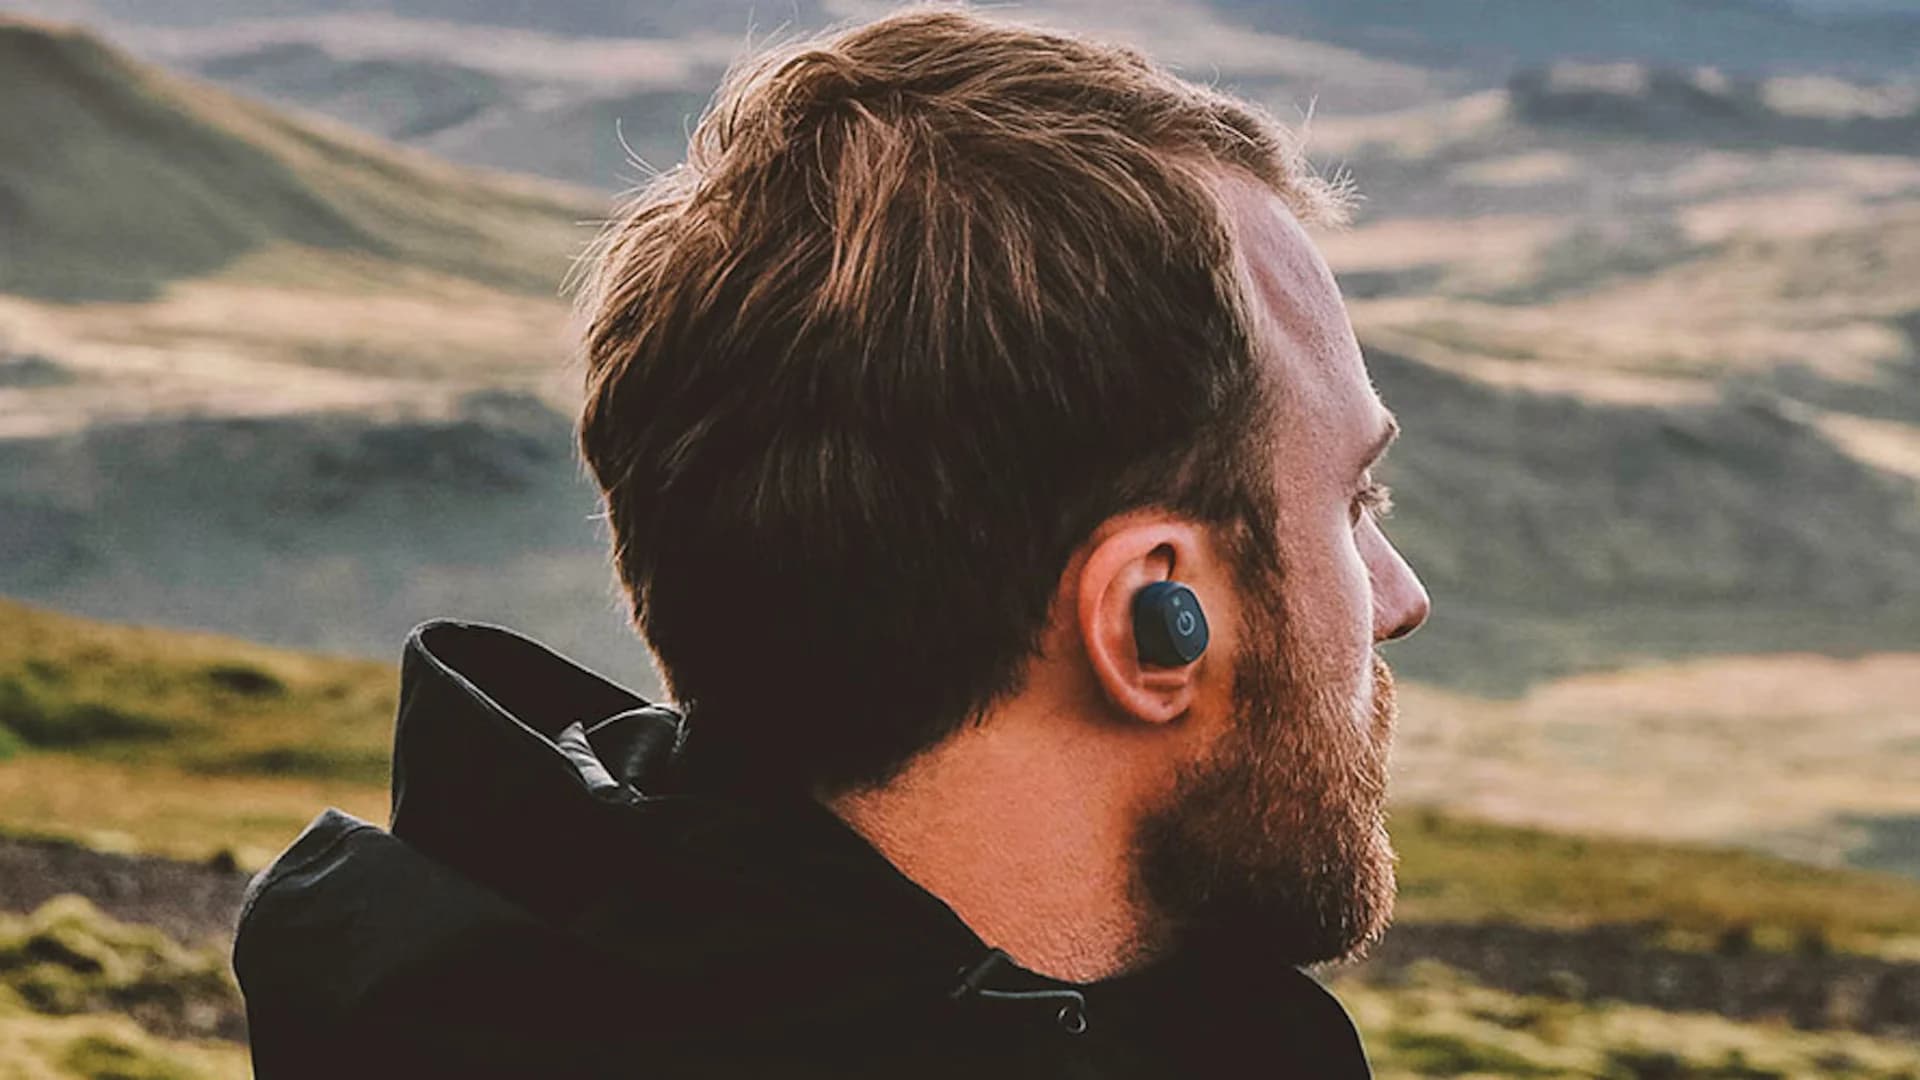 These cutting-edge waterproof earphones make a great gift